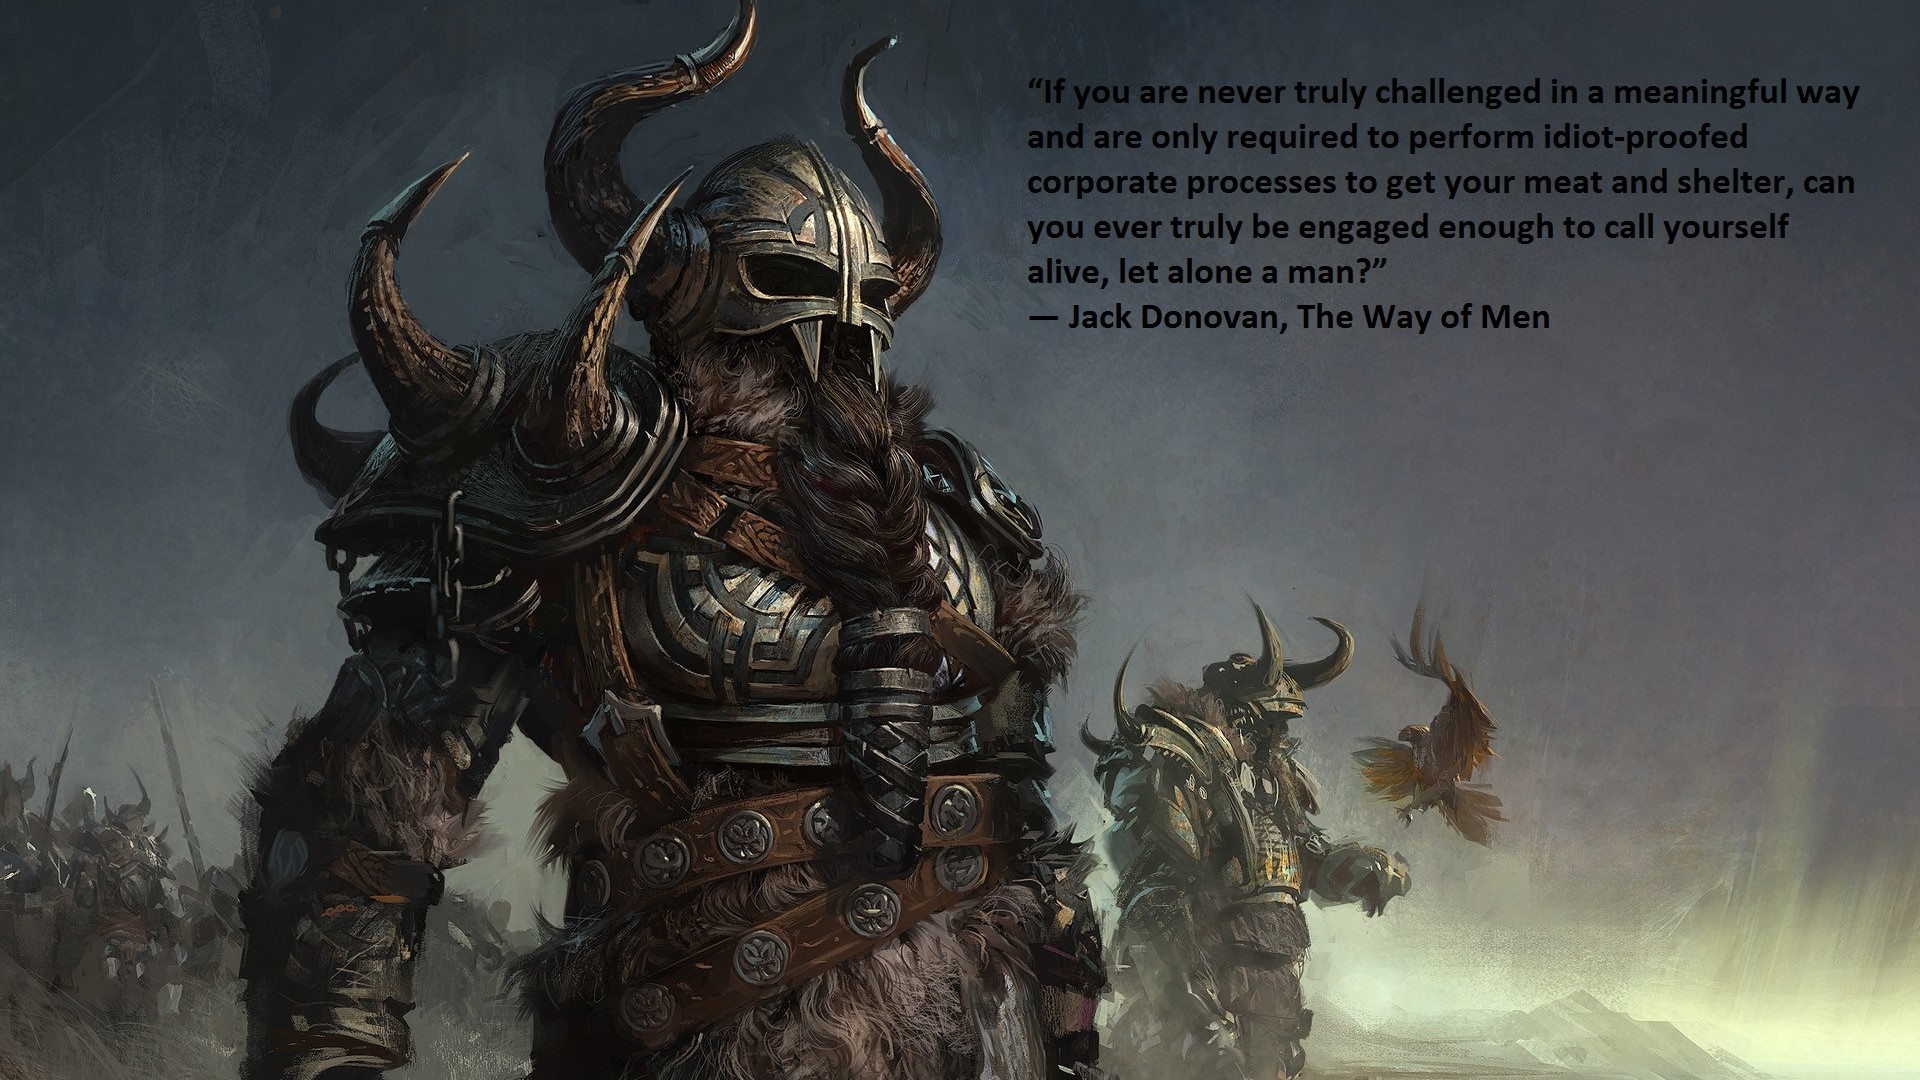 Jack Donovan Barbarian Quote 1920x1080